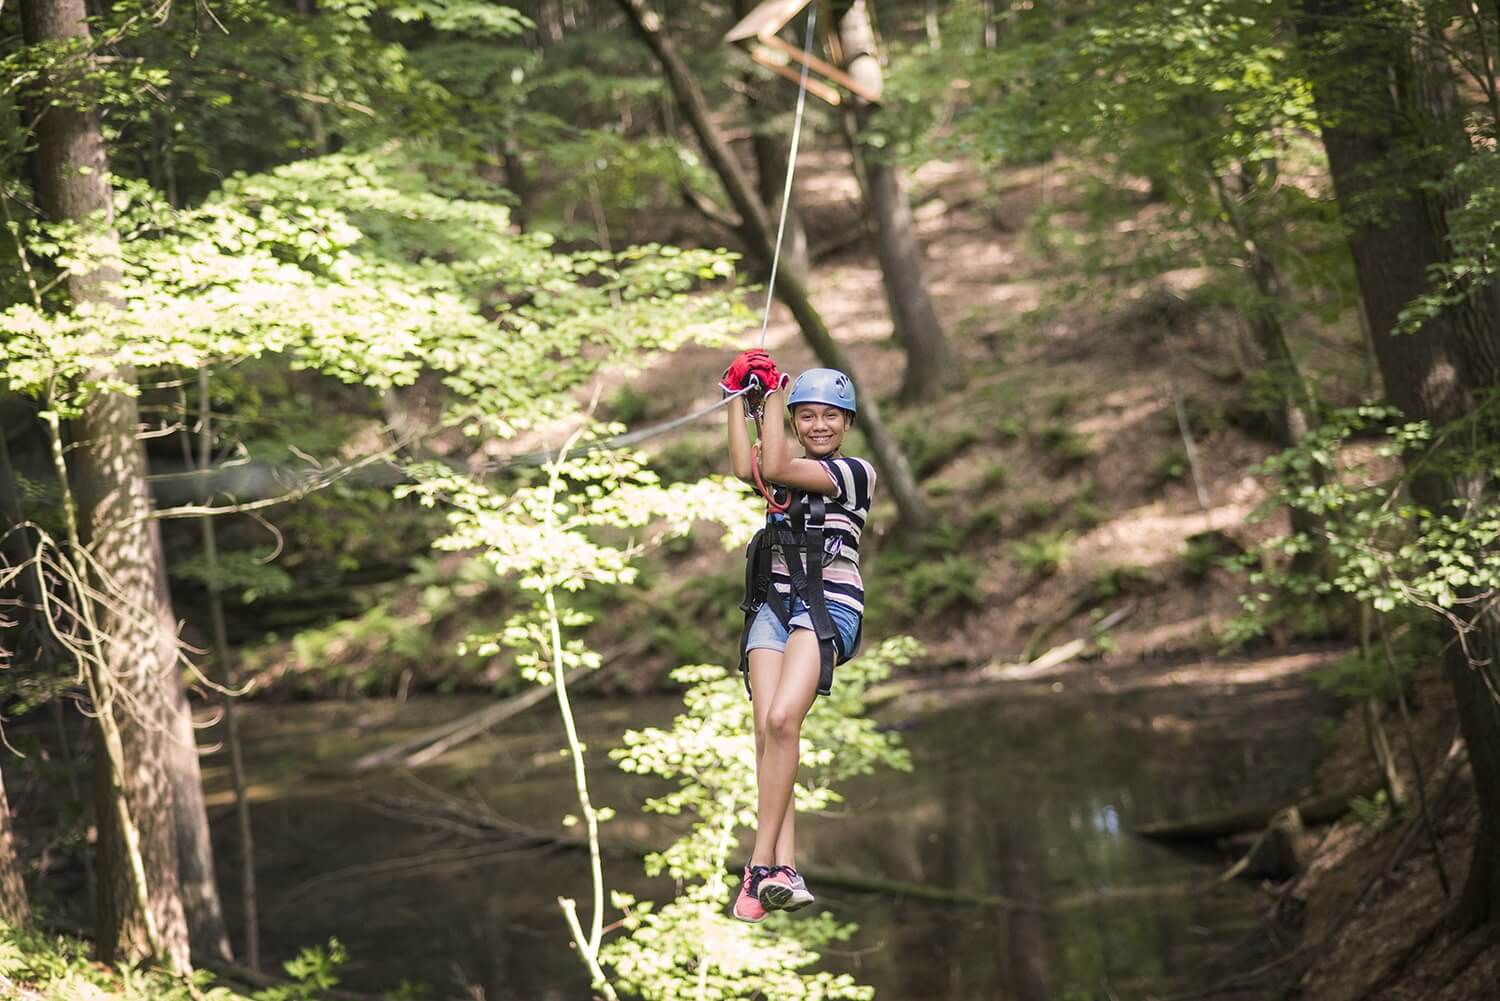 Featured image for “Adventurous Spirits Love Ziplining in Wisconsin Dells”